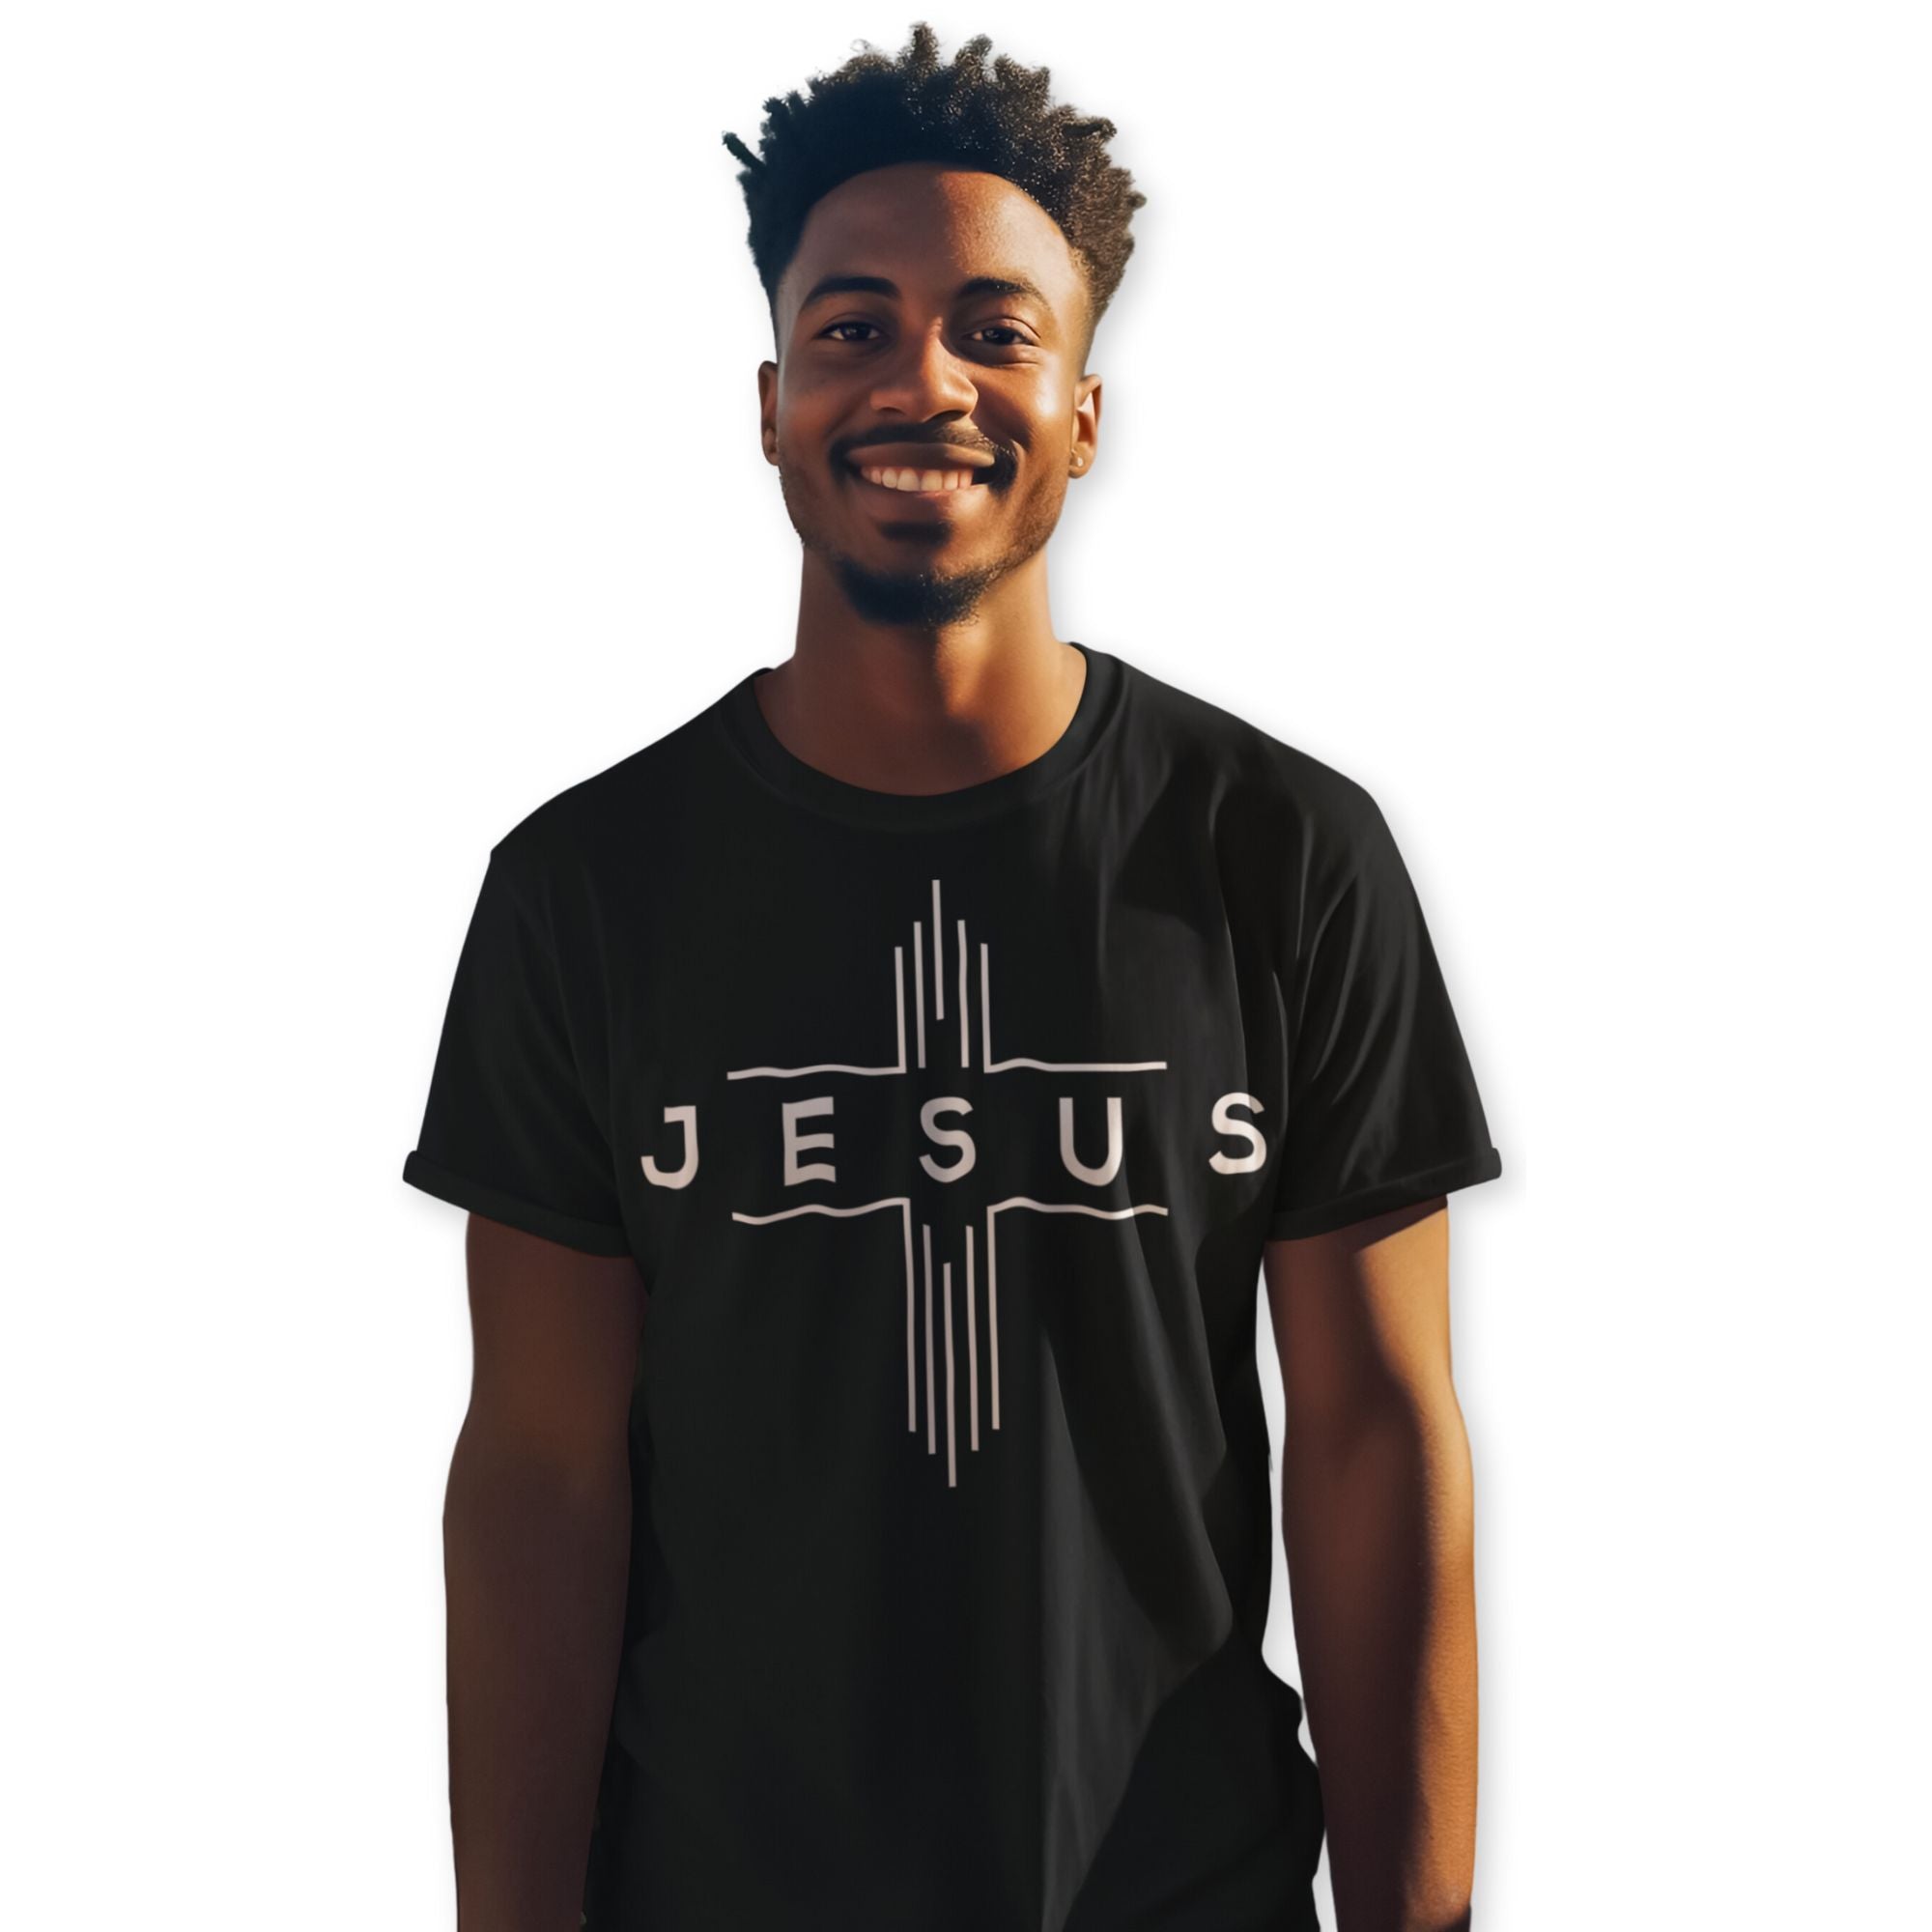 Jesus Cheveron Cross Men's Unisex Champion T-shirt - Black / Red - Matching Joggers Available Size: S Color: Black Jesus Passion Apparel